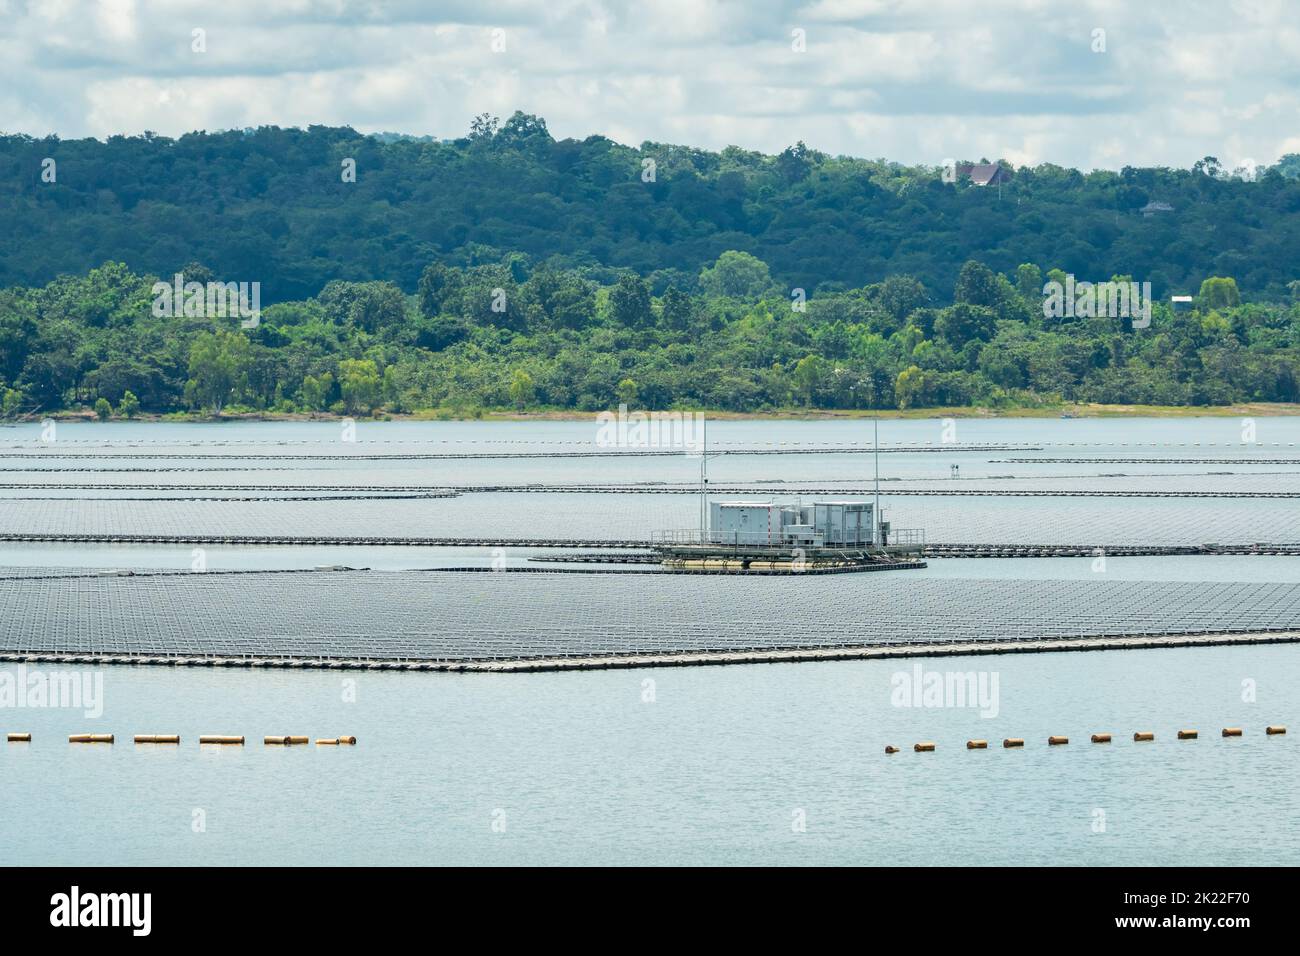 Floating solar farm or floating photovoltaics. Solar power. Landscape of solar panels floating on water in reservoir or lake. Solar technology. Stock Photo